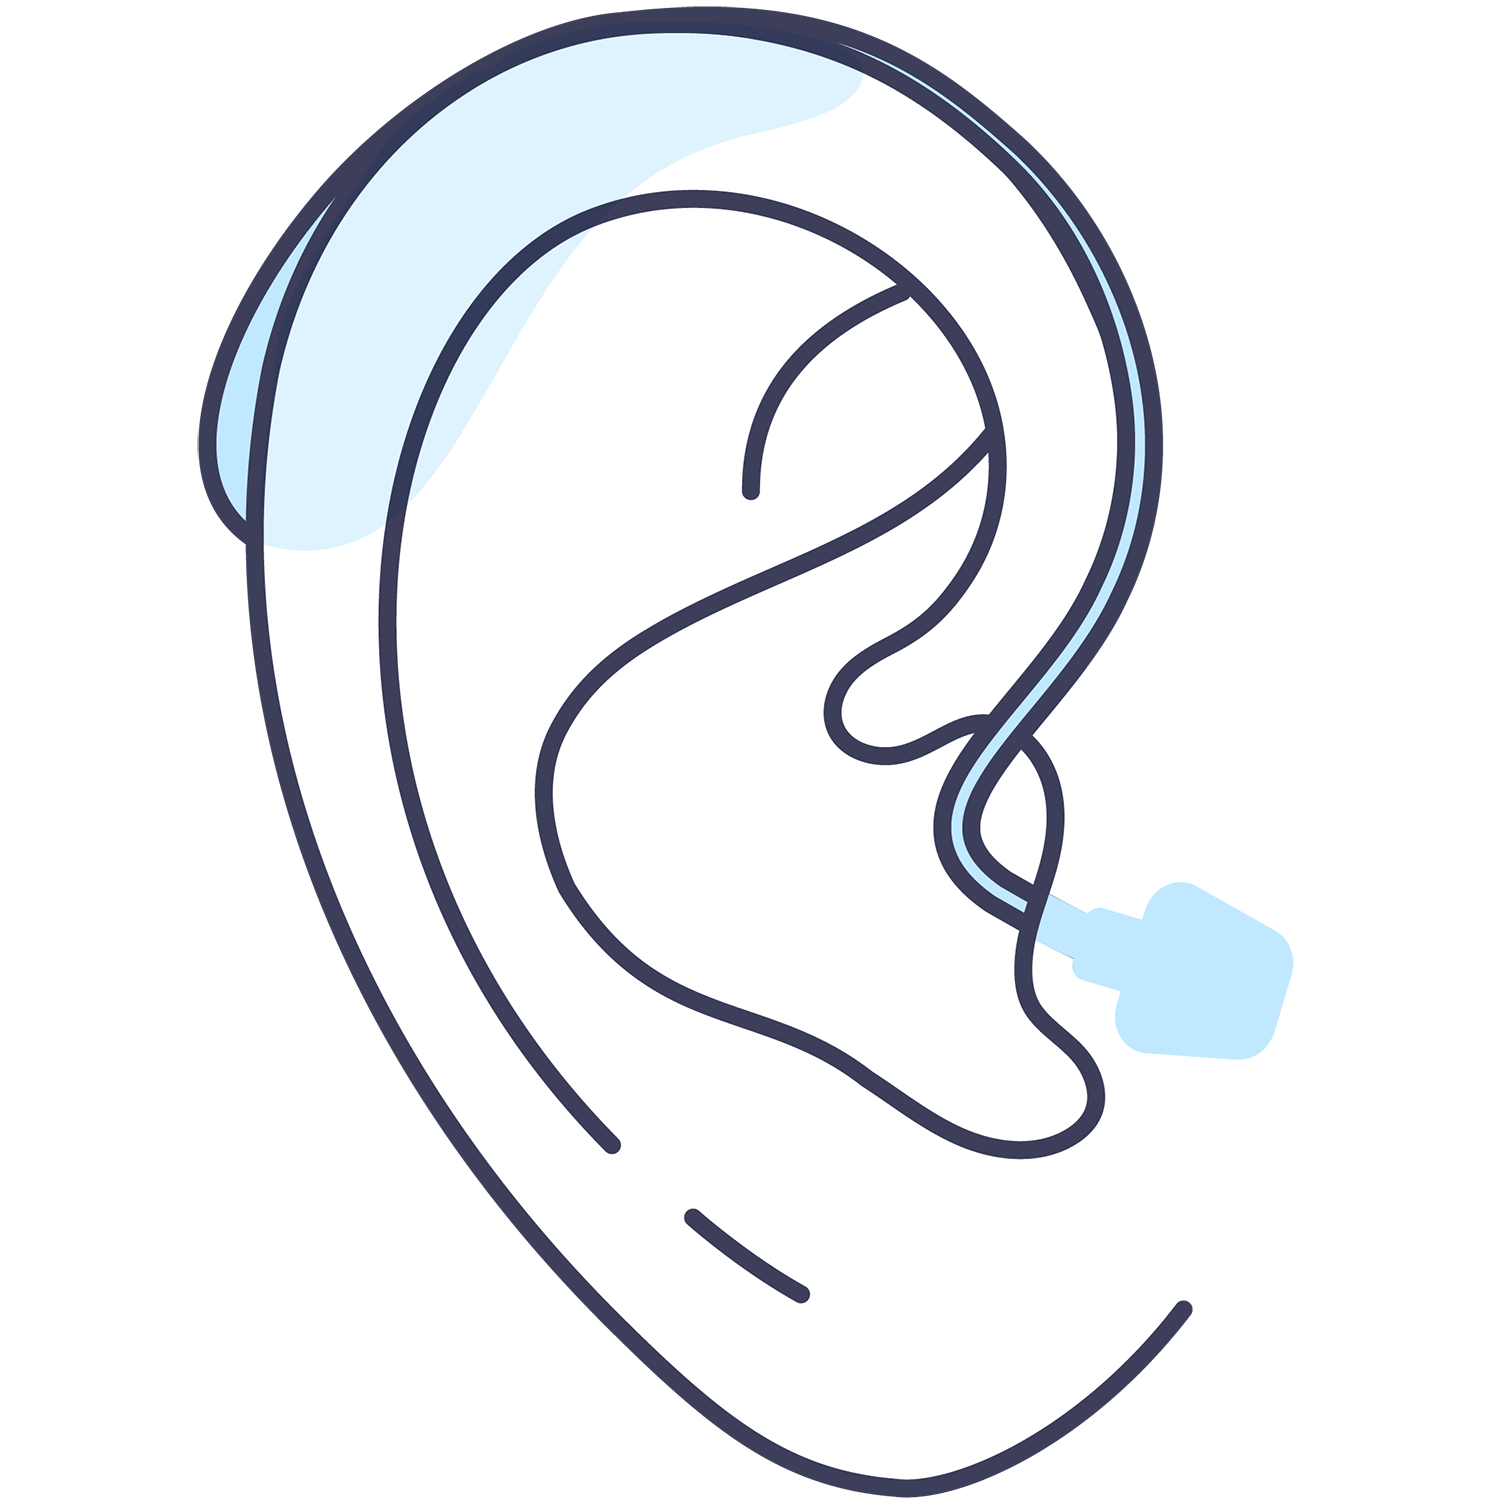 hearing aid on ear